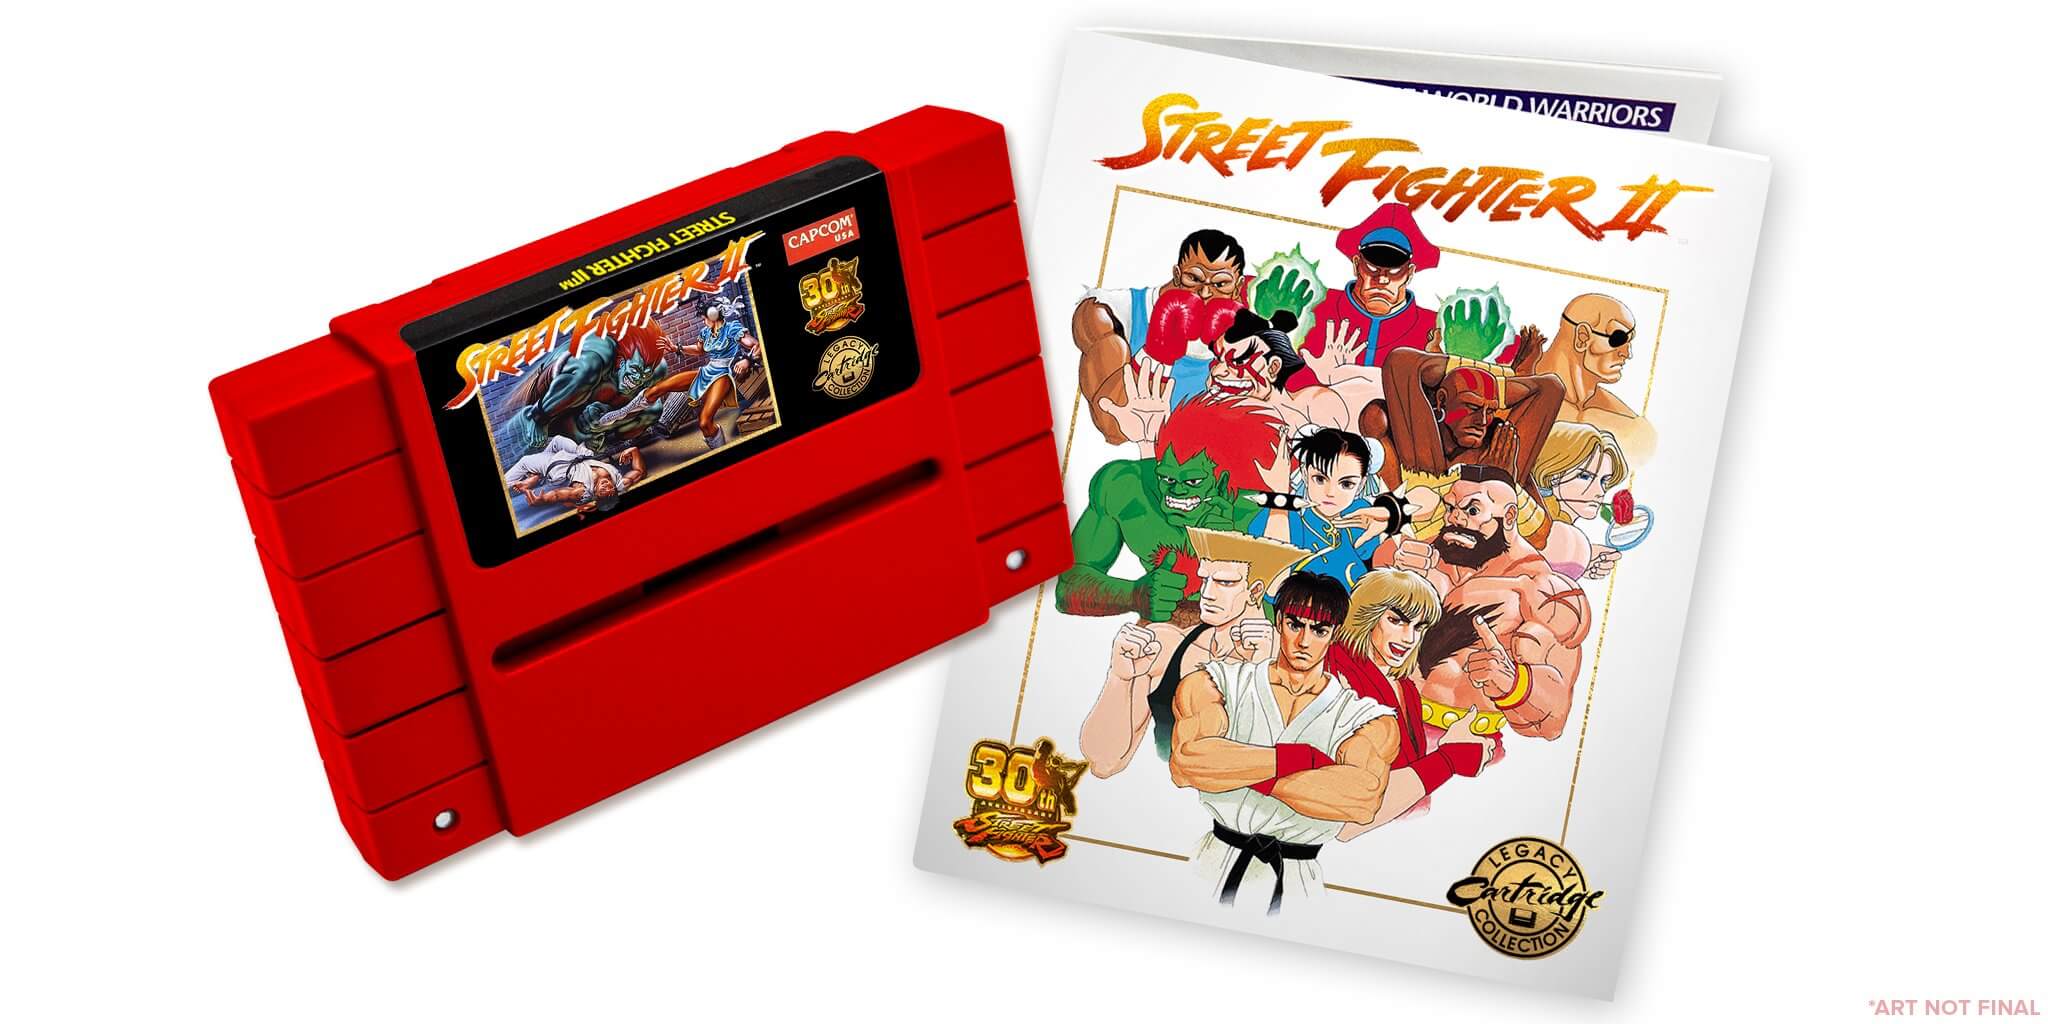 Cartucho Street Fighter II 30 anos